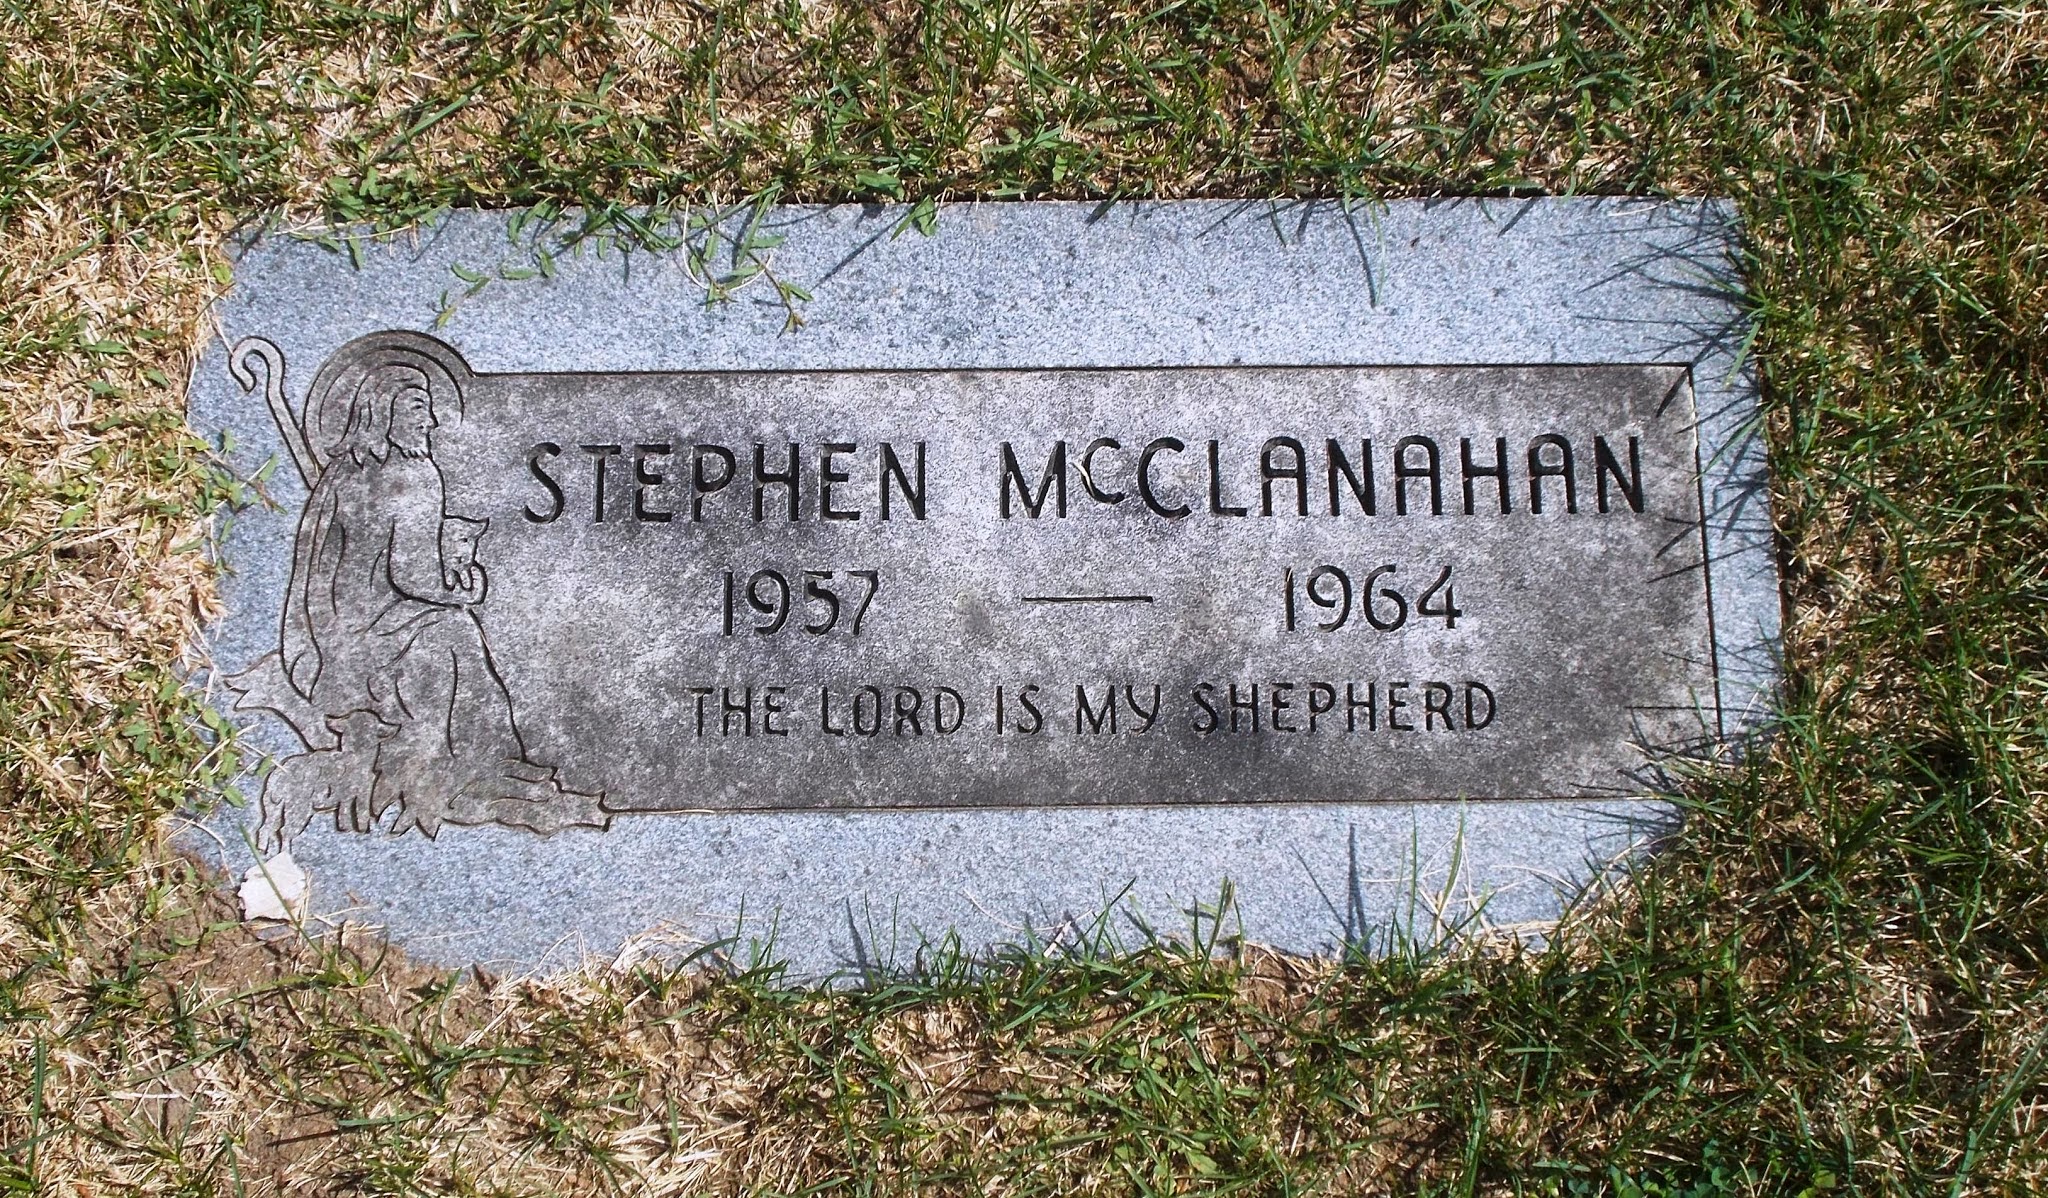 Stephen McClanahan